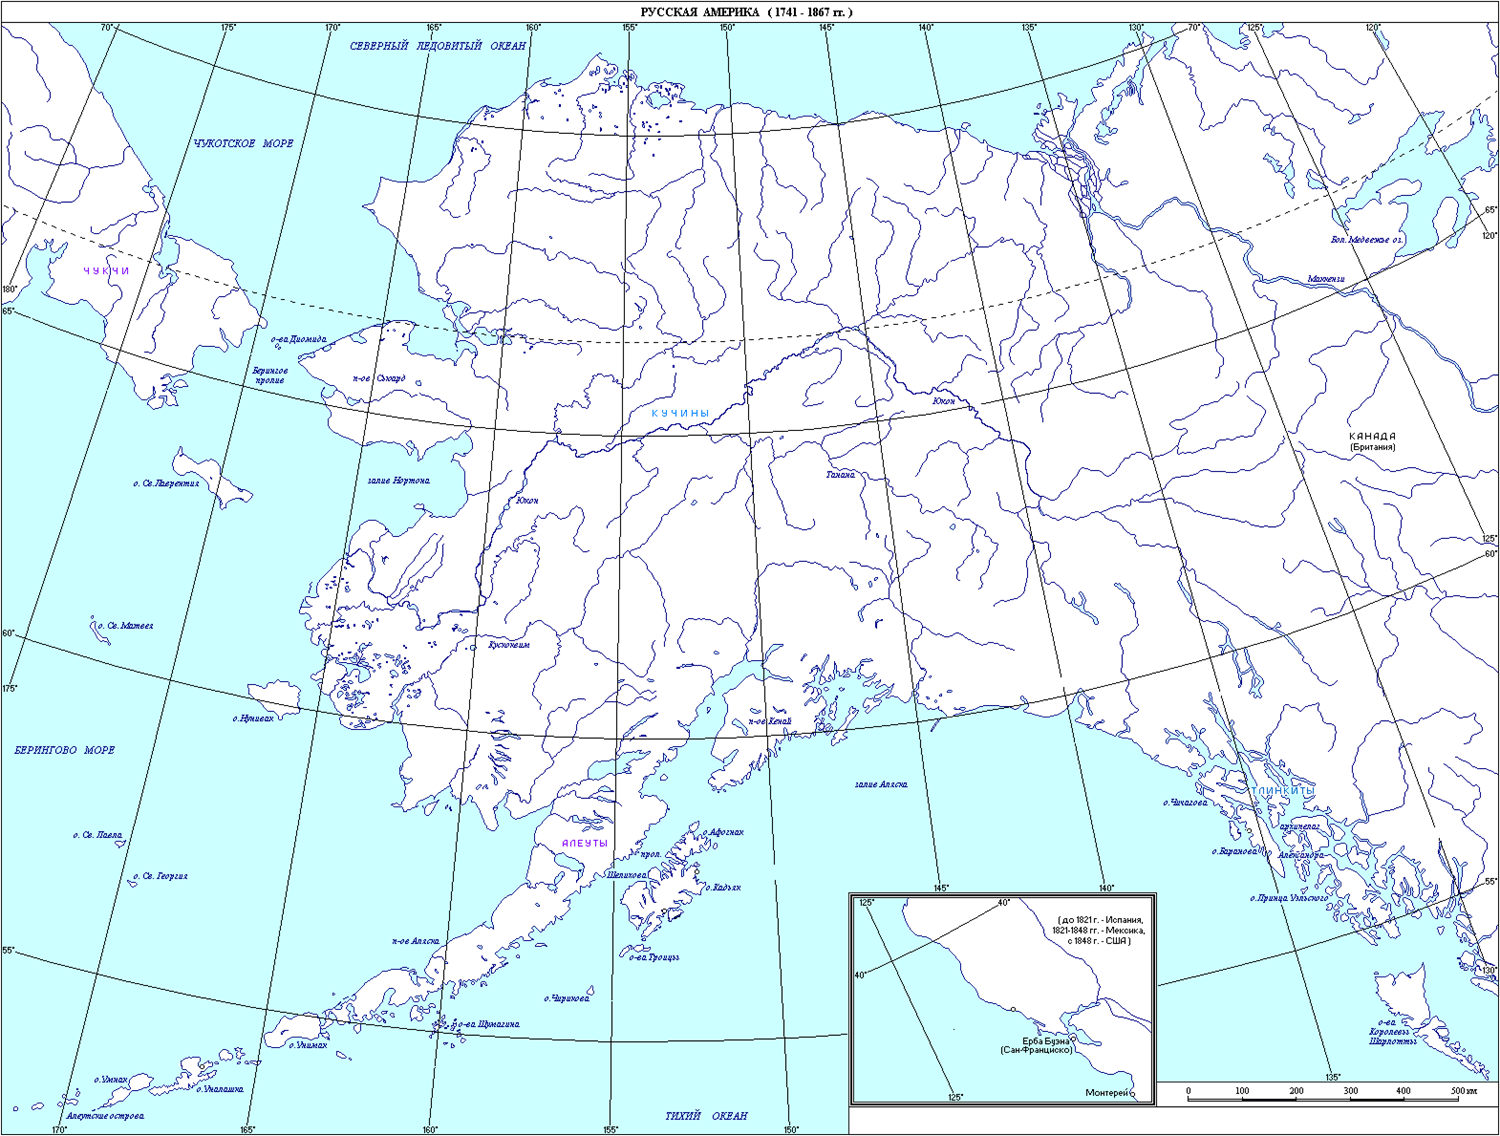 Полуостров Аляска на карте Северной Америки на контурной карте. Штат Аляска на карте. Штат Аляска контурная карта. Полуостров Аляска на контурной карте Северной Америки. Аляска на контурной карте